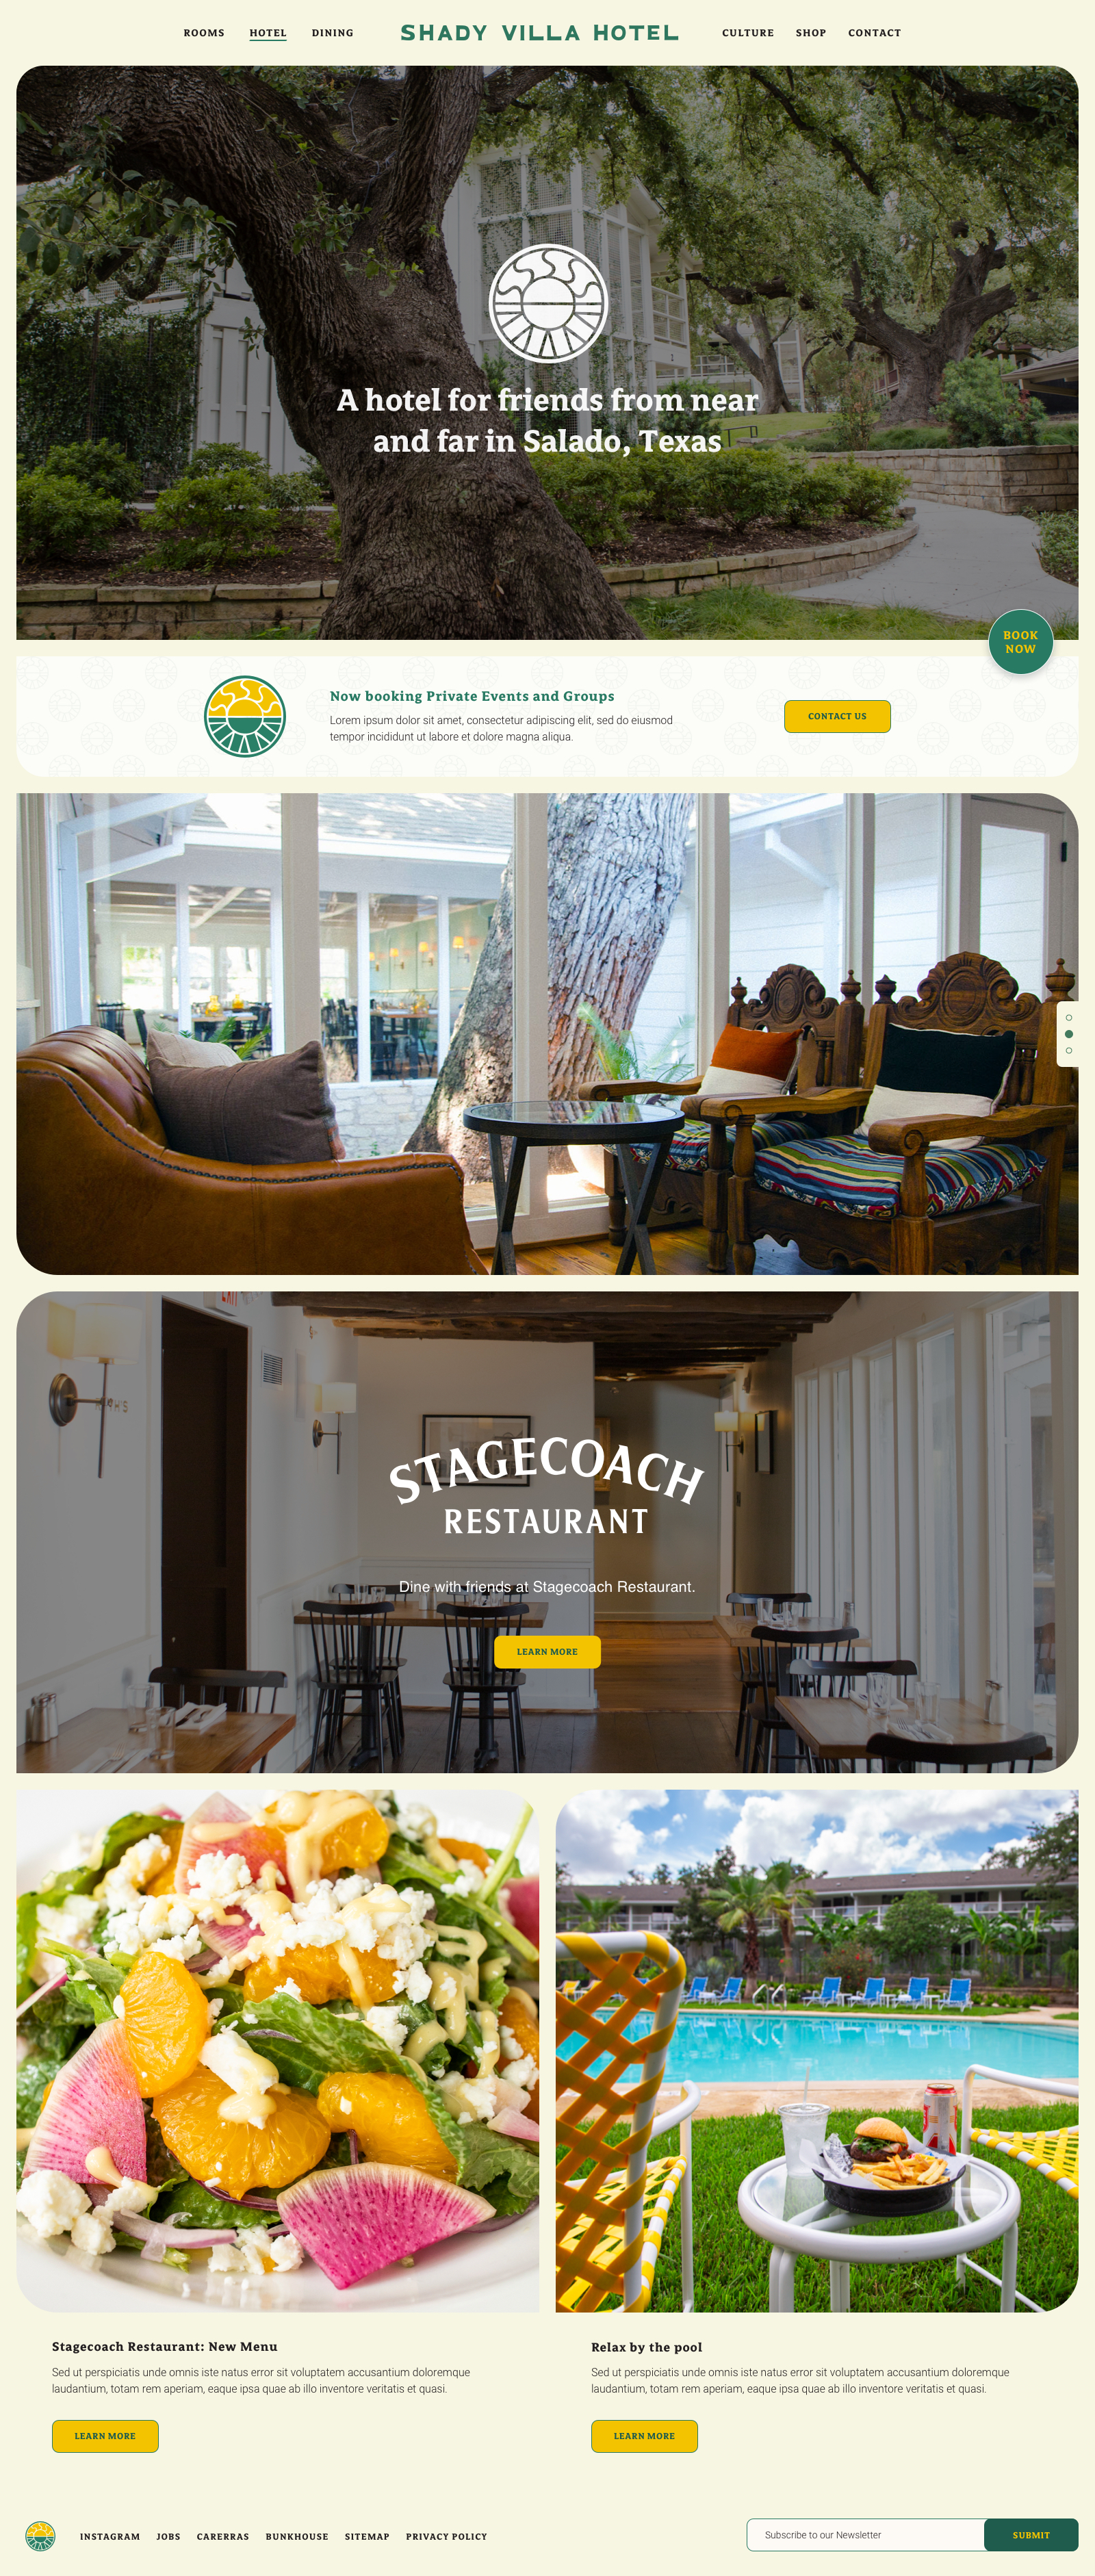 Shady Villa Hotel homepage design